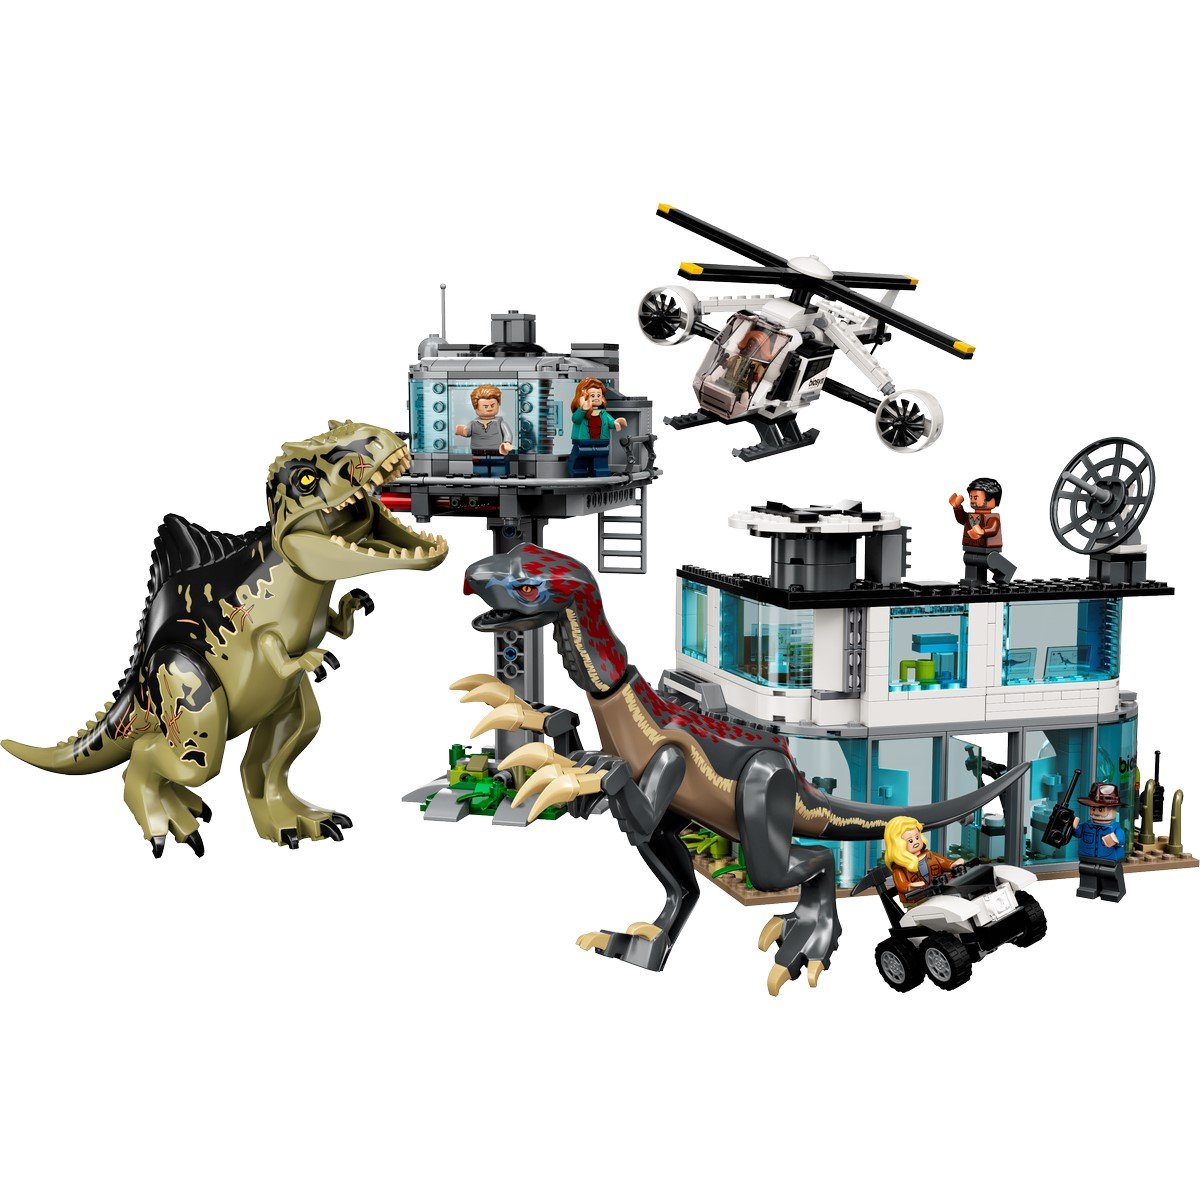 Combat de dinosaures LEGO Jurassic World 76949 - La Grande Récré